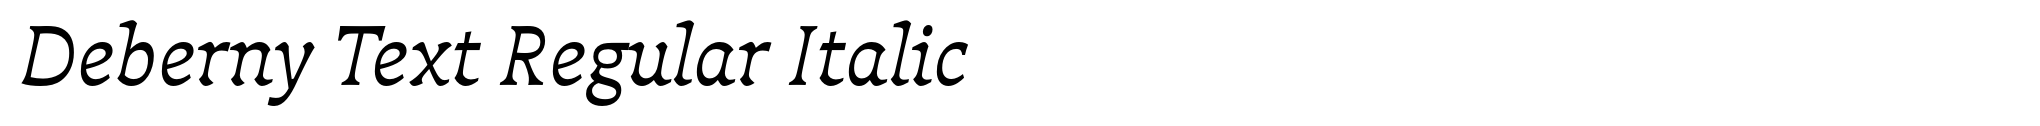 Deberny Text Regular Italic image